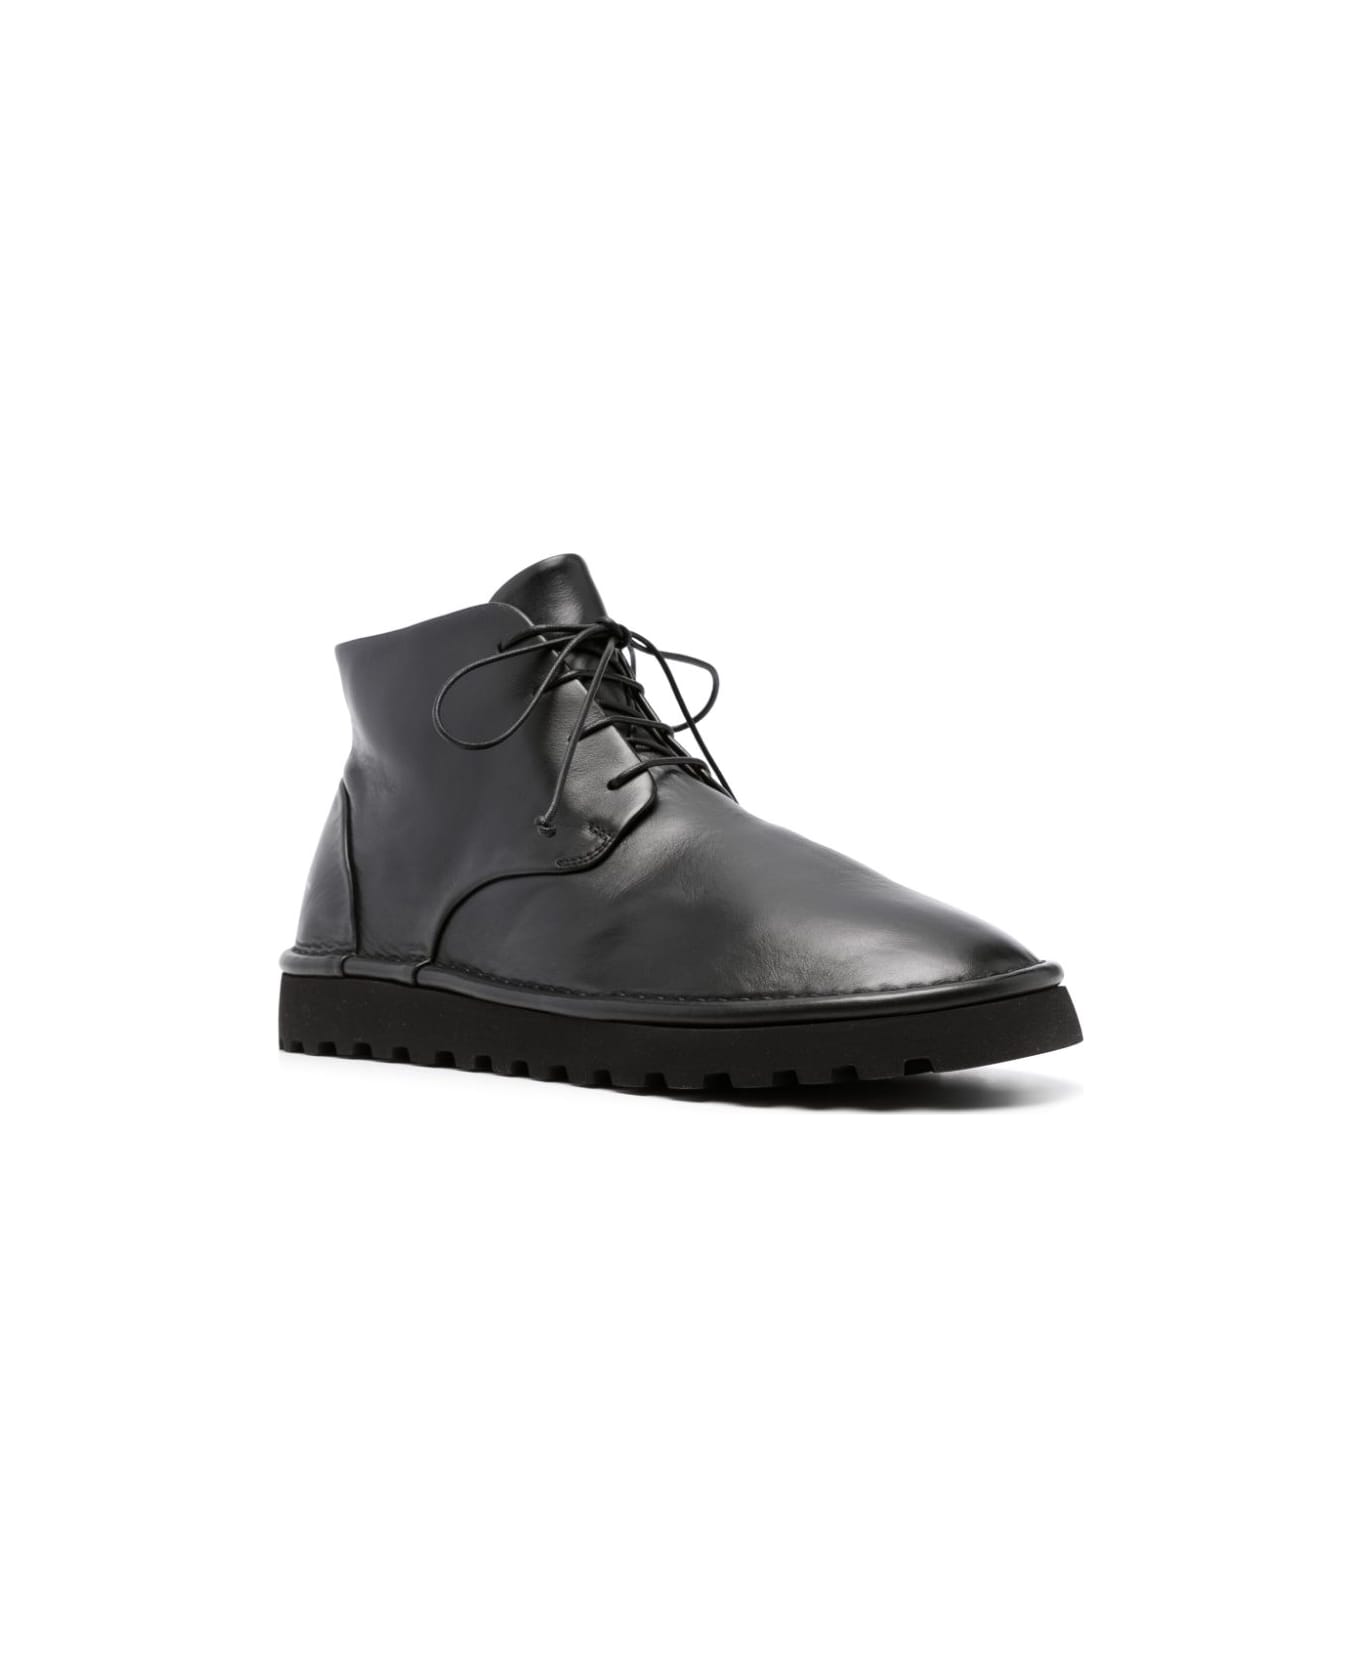 Marsell Sancrispa Alta Pomice Ankle Boots - Black ブーツ